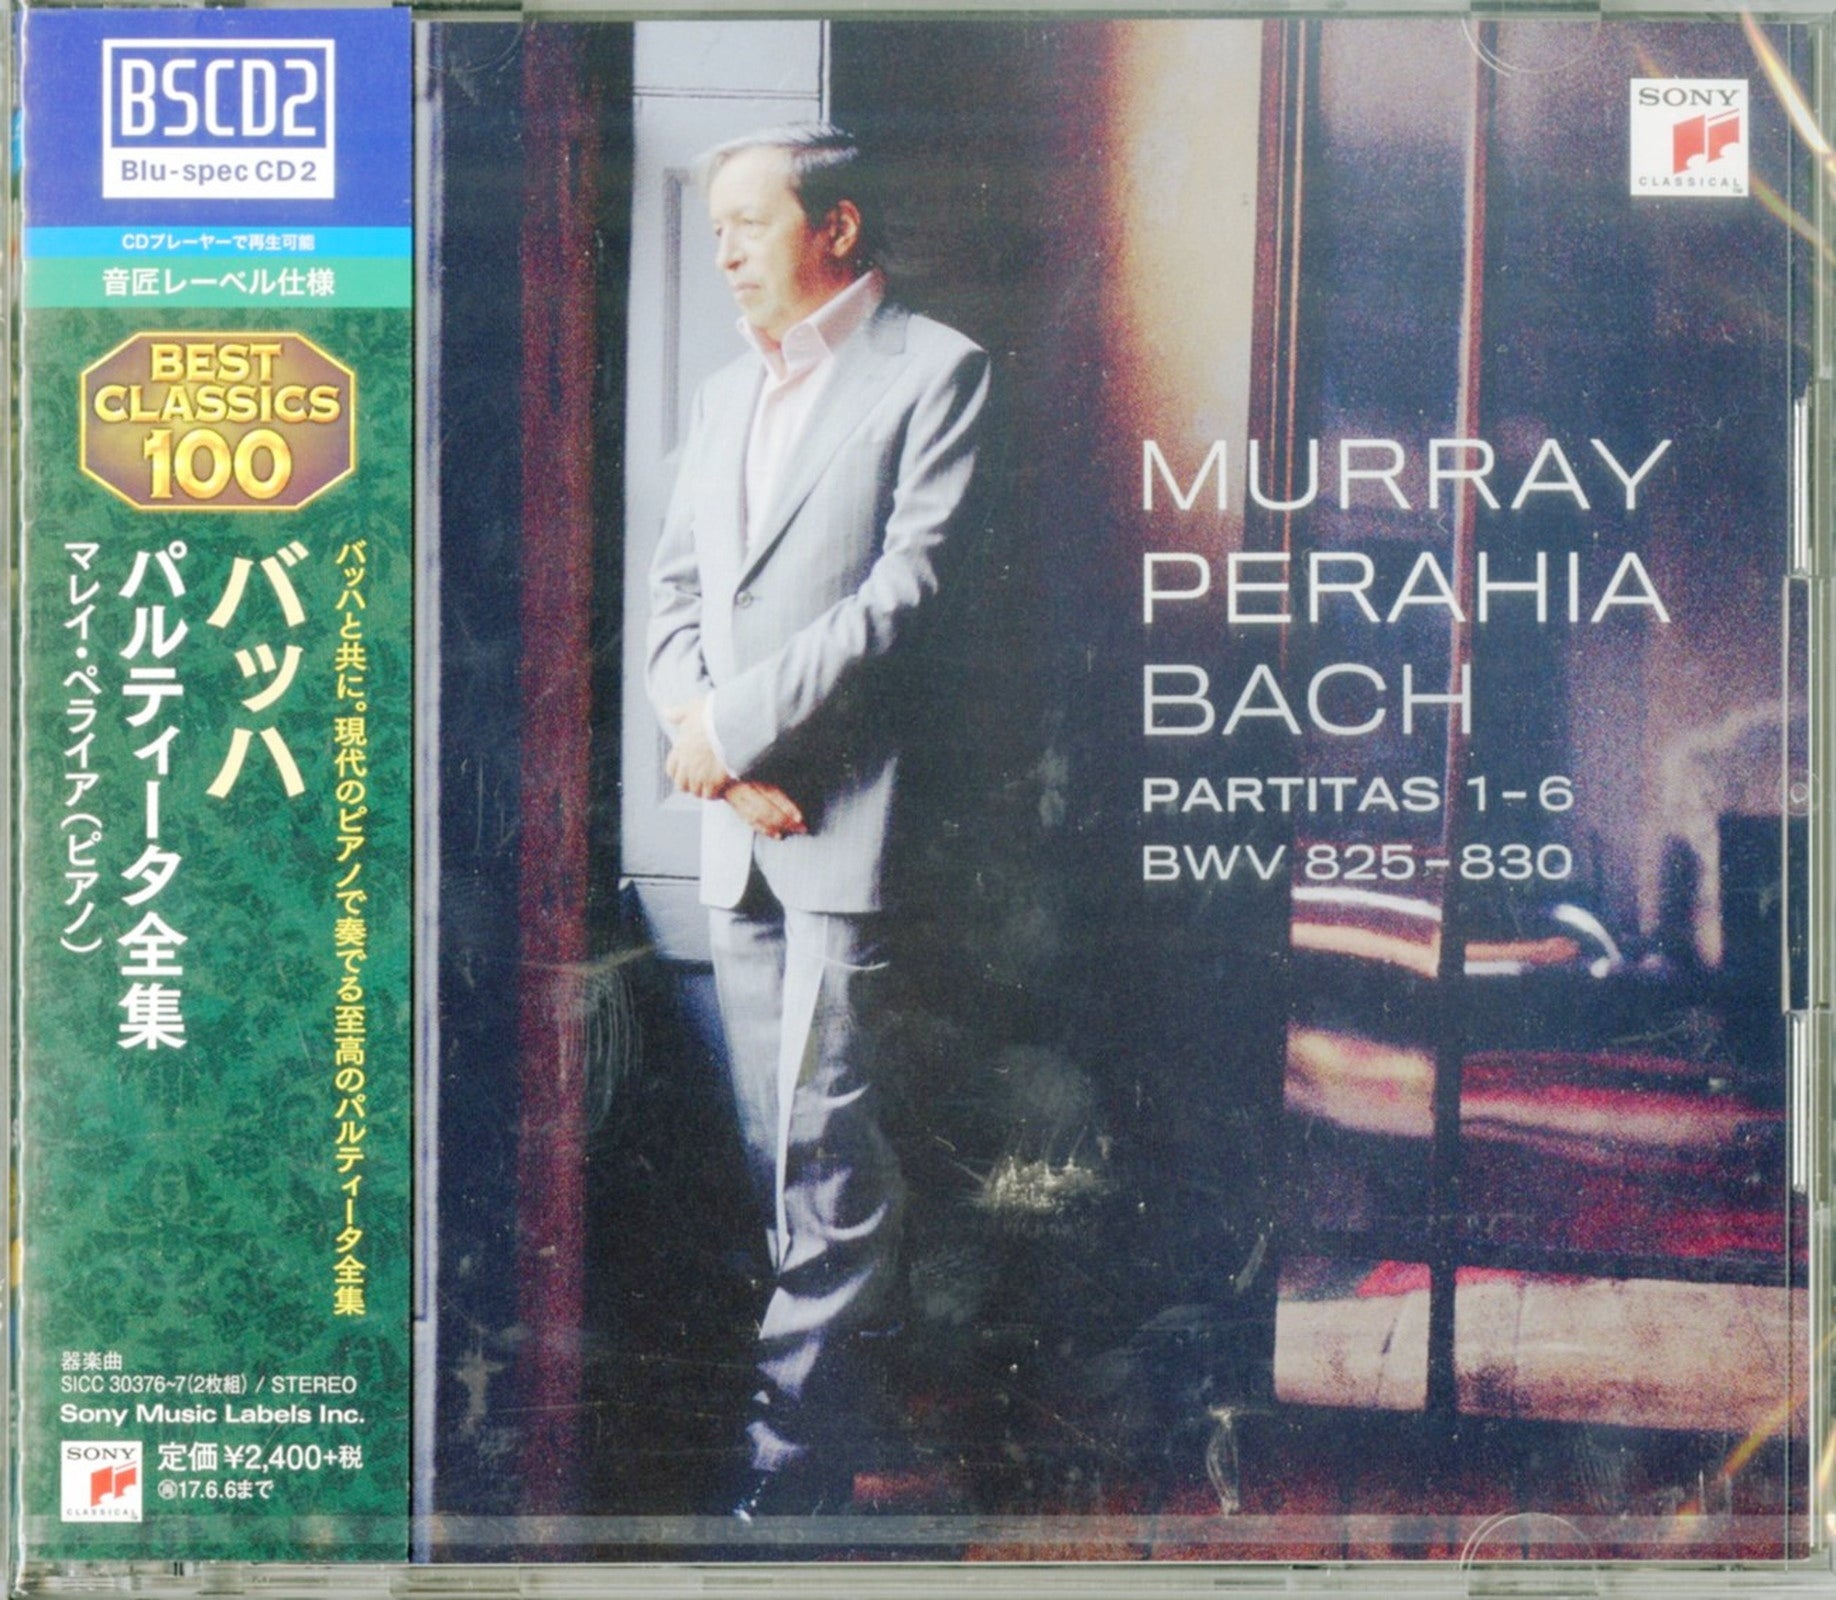 Murray Perahia - J.S.Bach: Partitas Nos. 1-6 - Japan 2 Blu-spec CD2 – CDs  Vinyl Japan Store